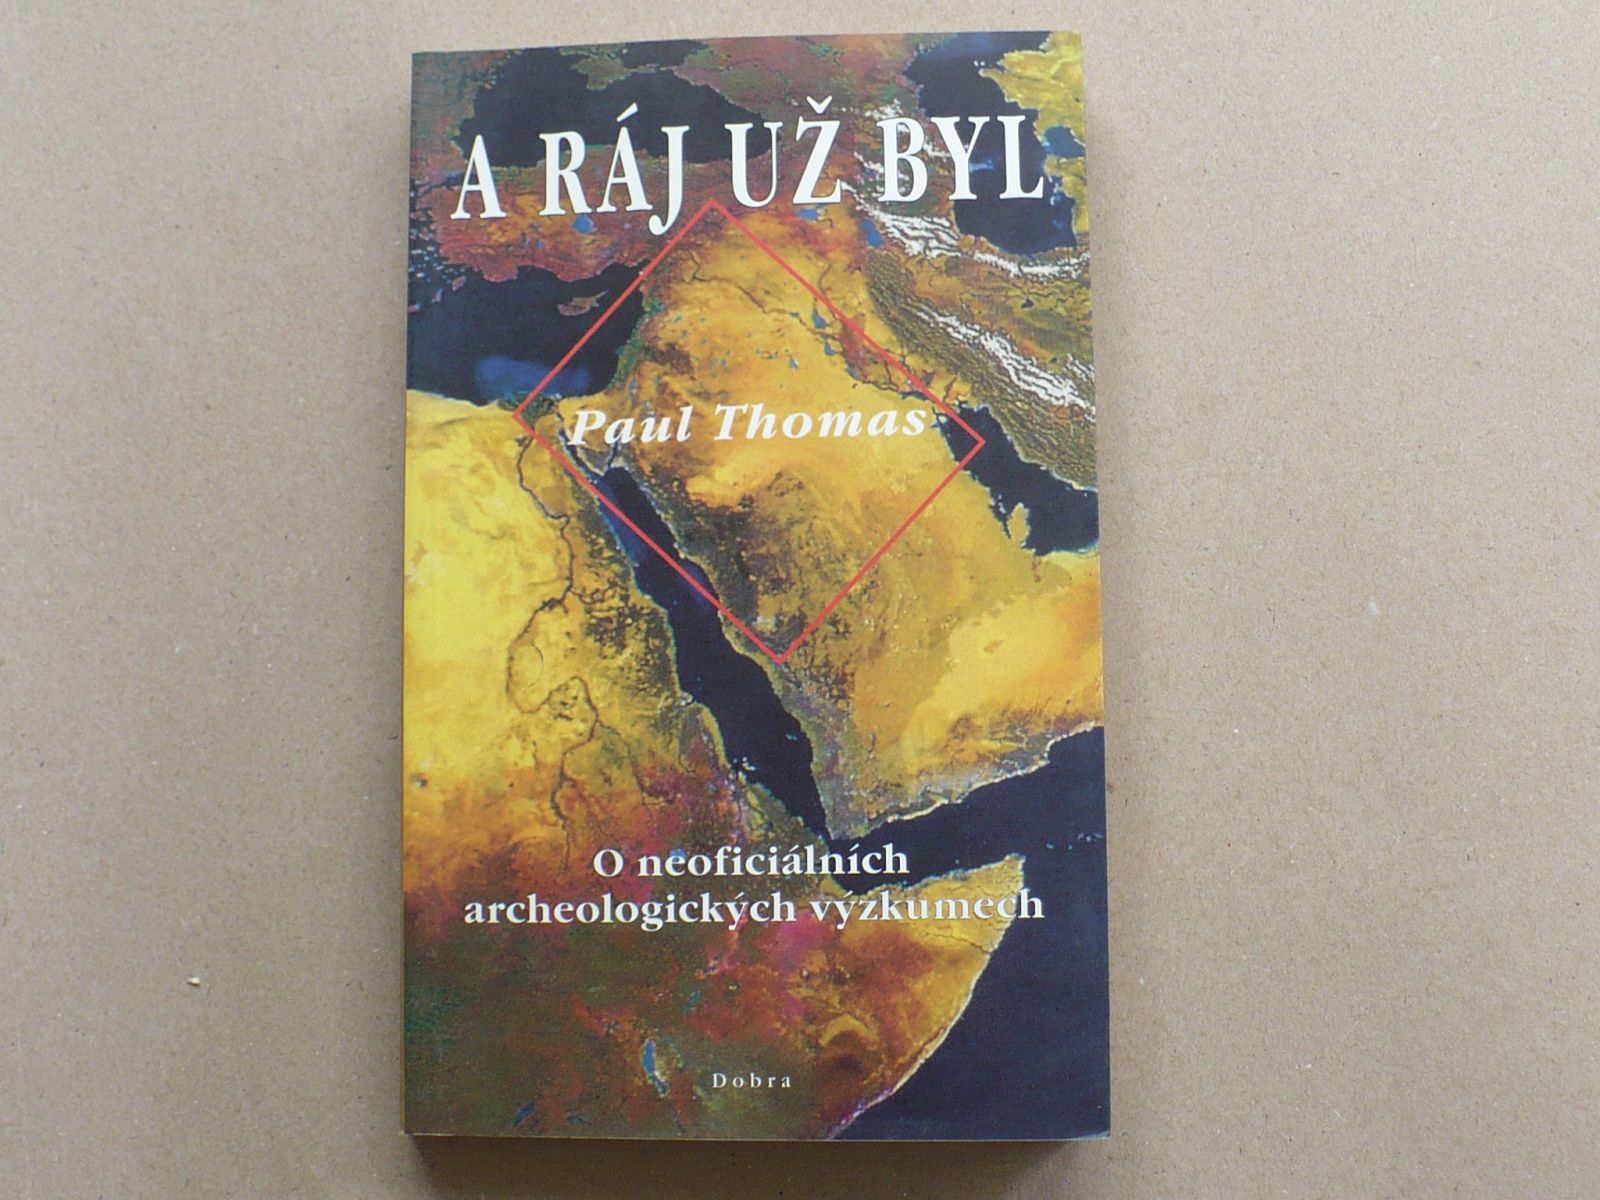 Paul Thomas - A ráj už byl (2001)